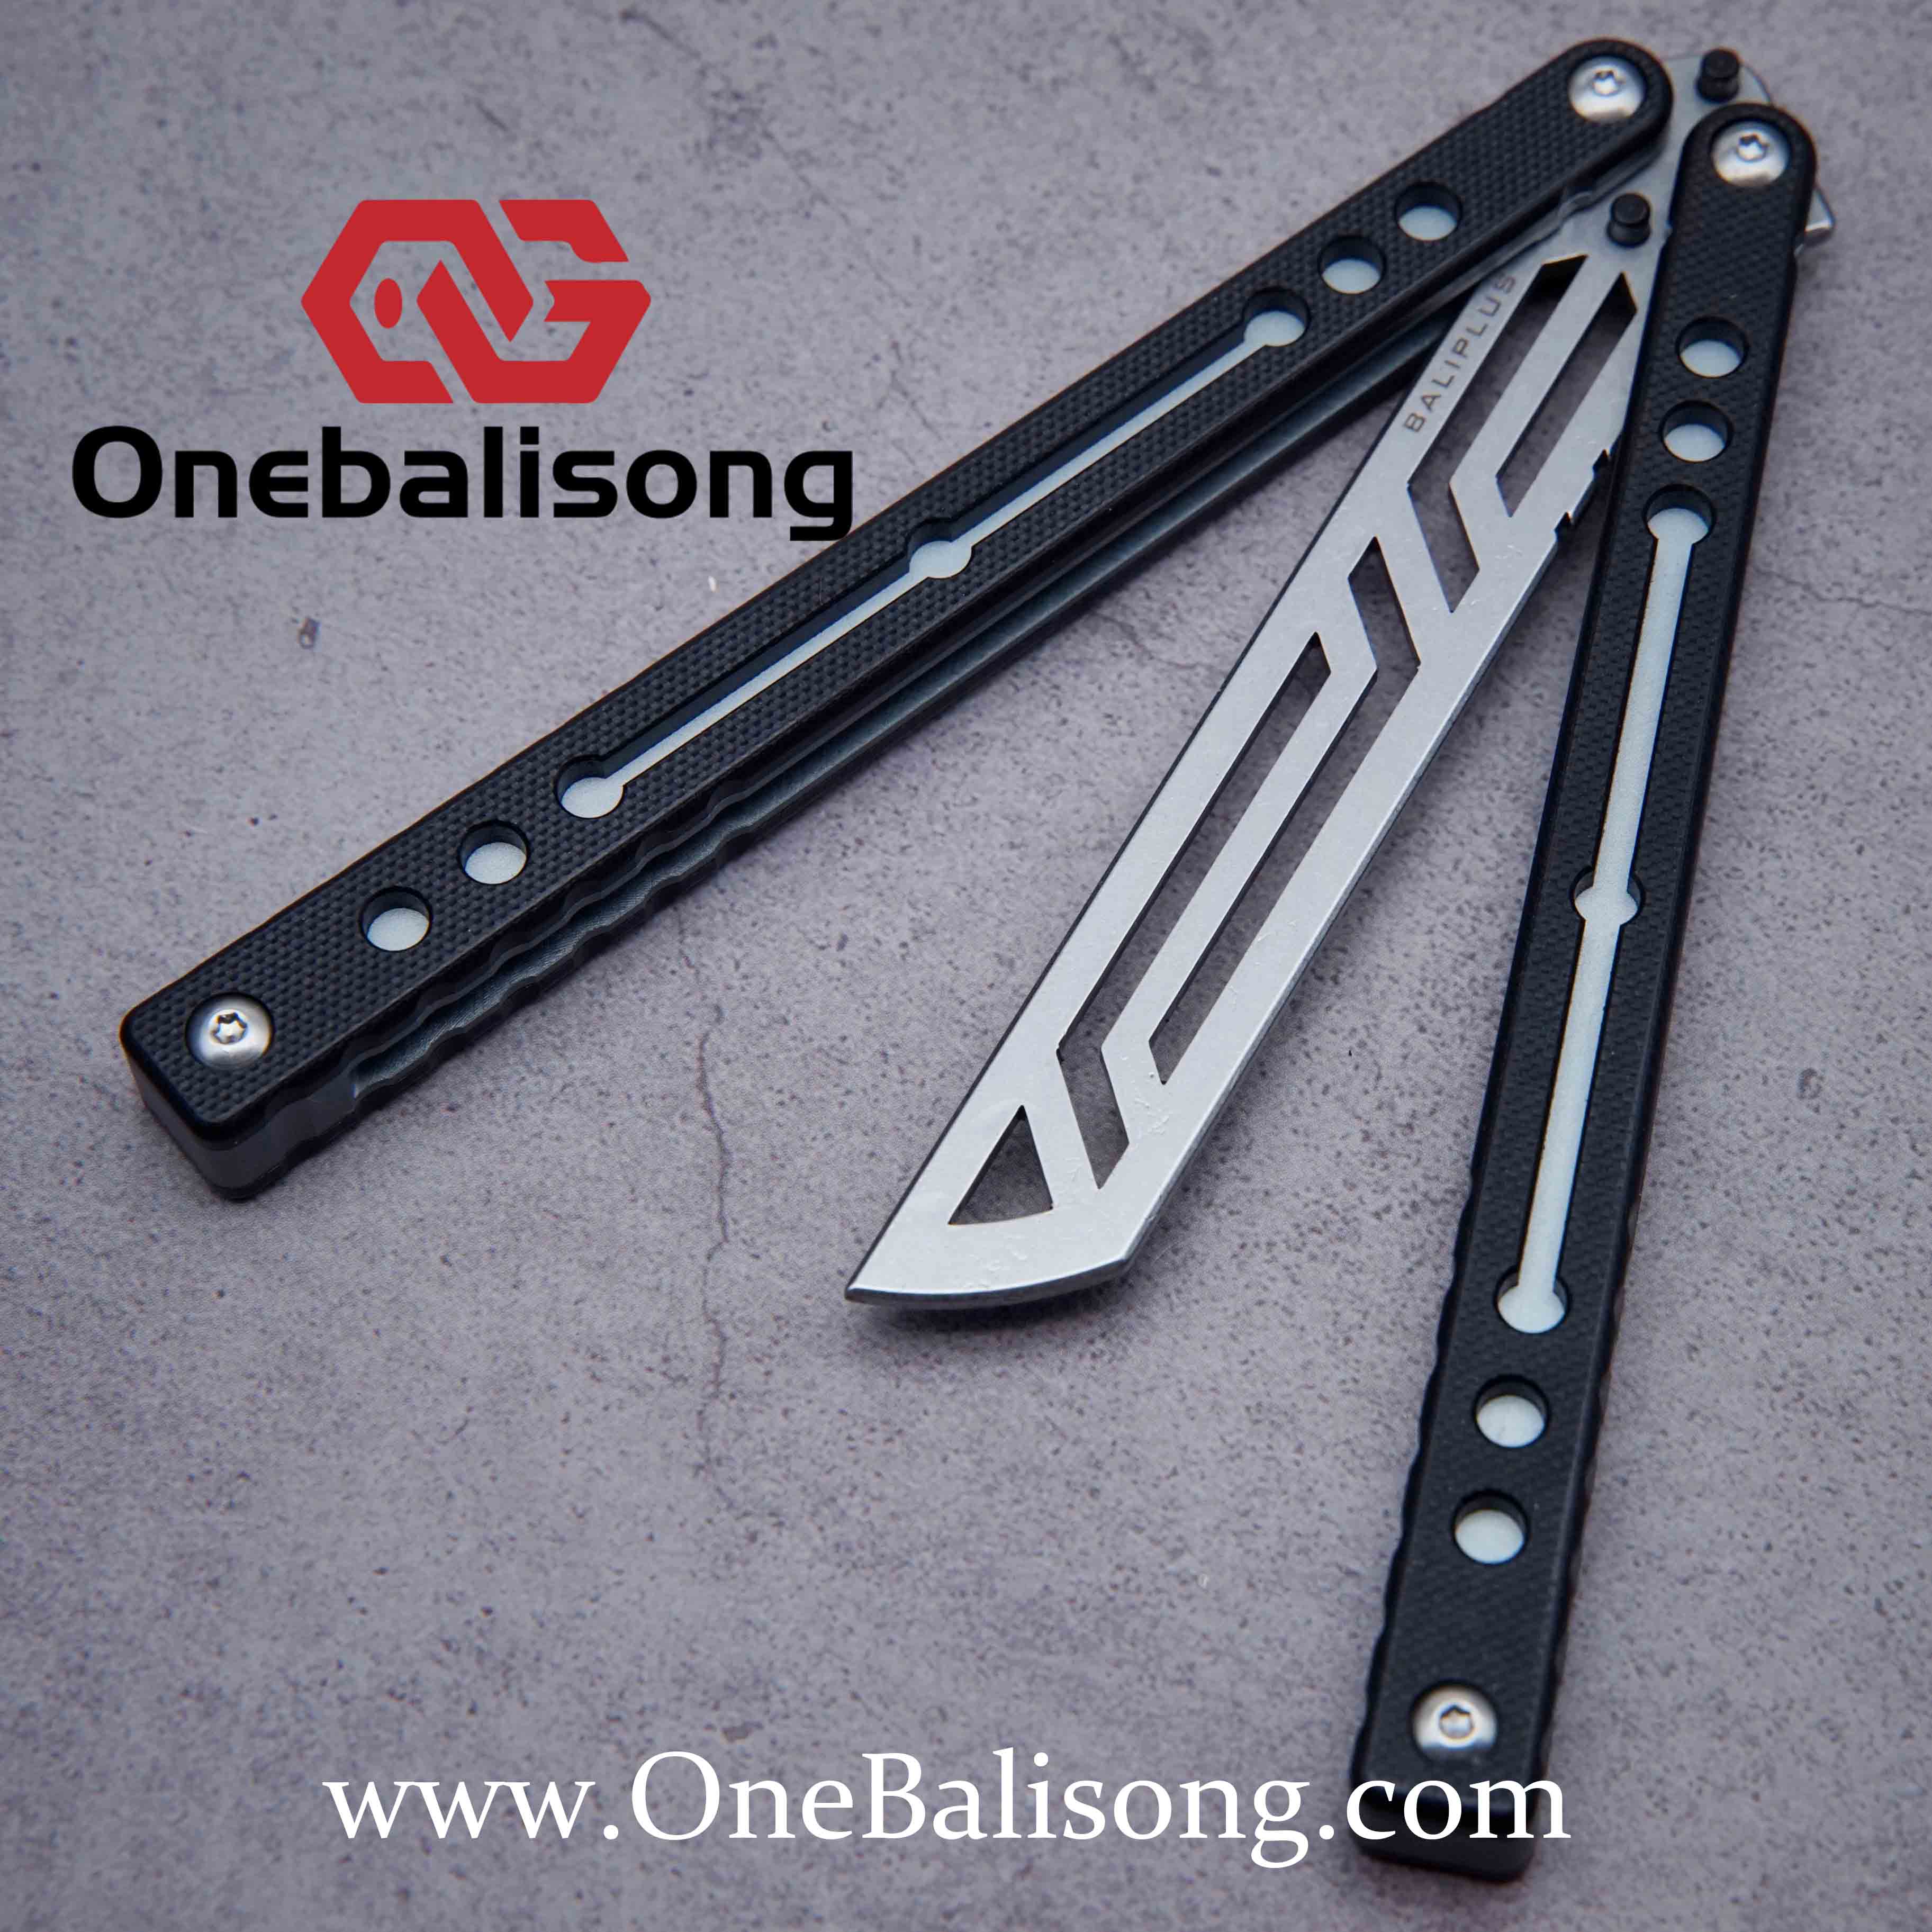 baliplus nautilus V2 clone Aluminum -Onebalisong – One Balisong